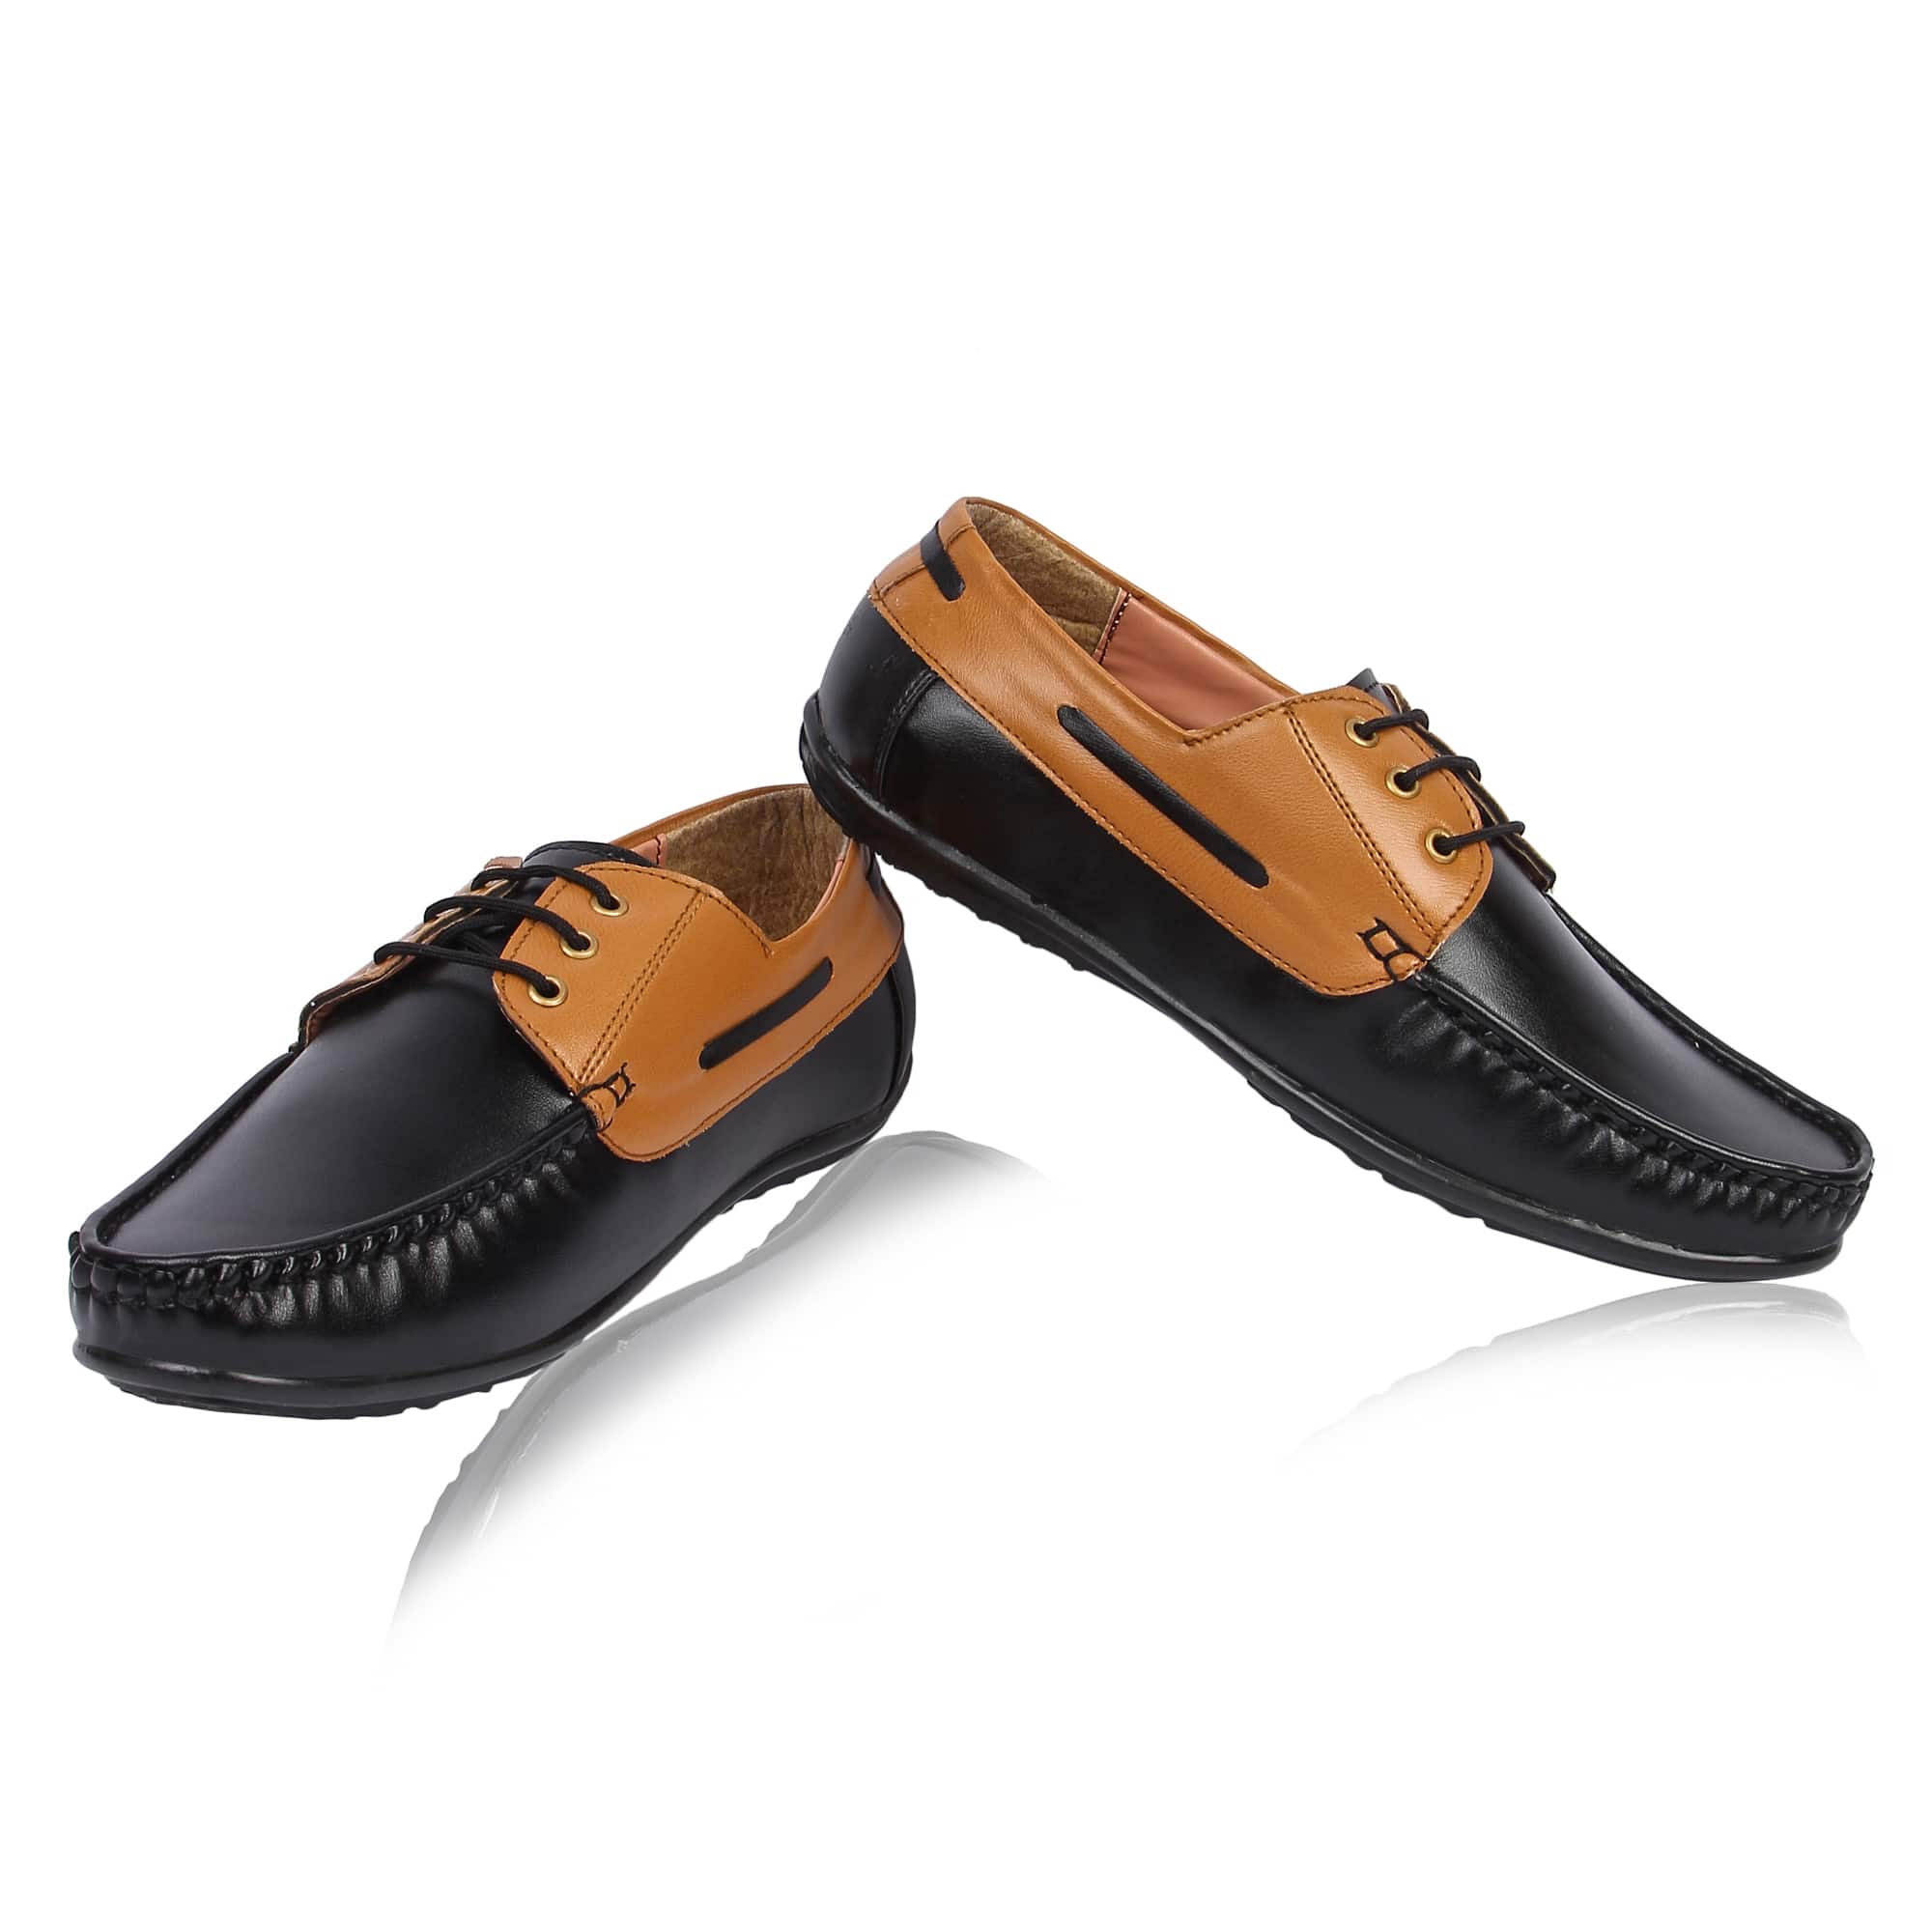 IMG_0126-min | Online Store for Men Footwear in India